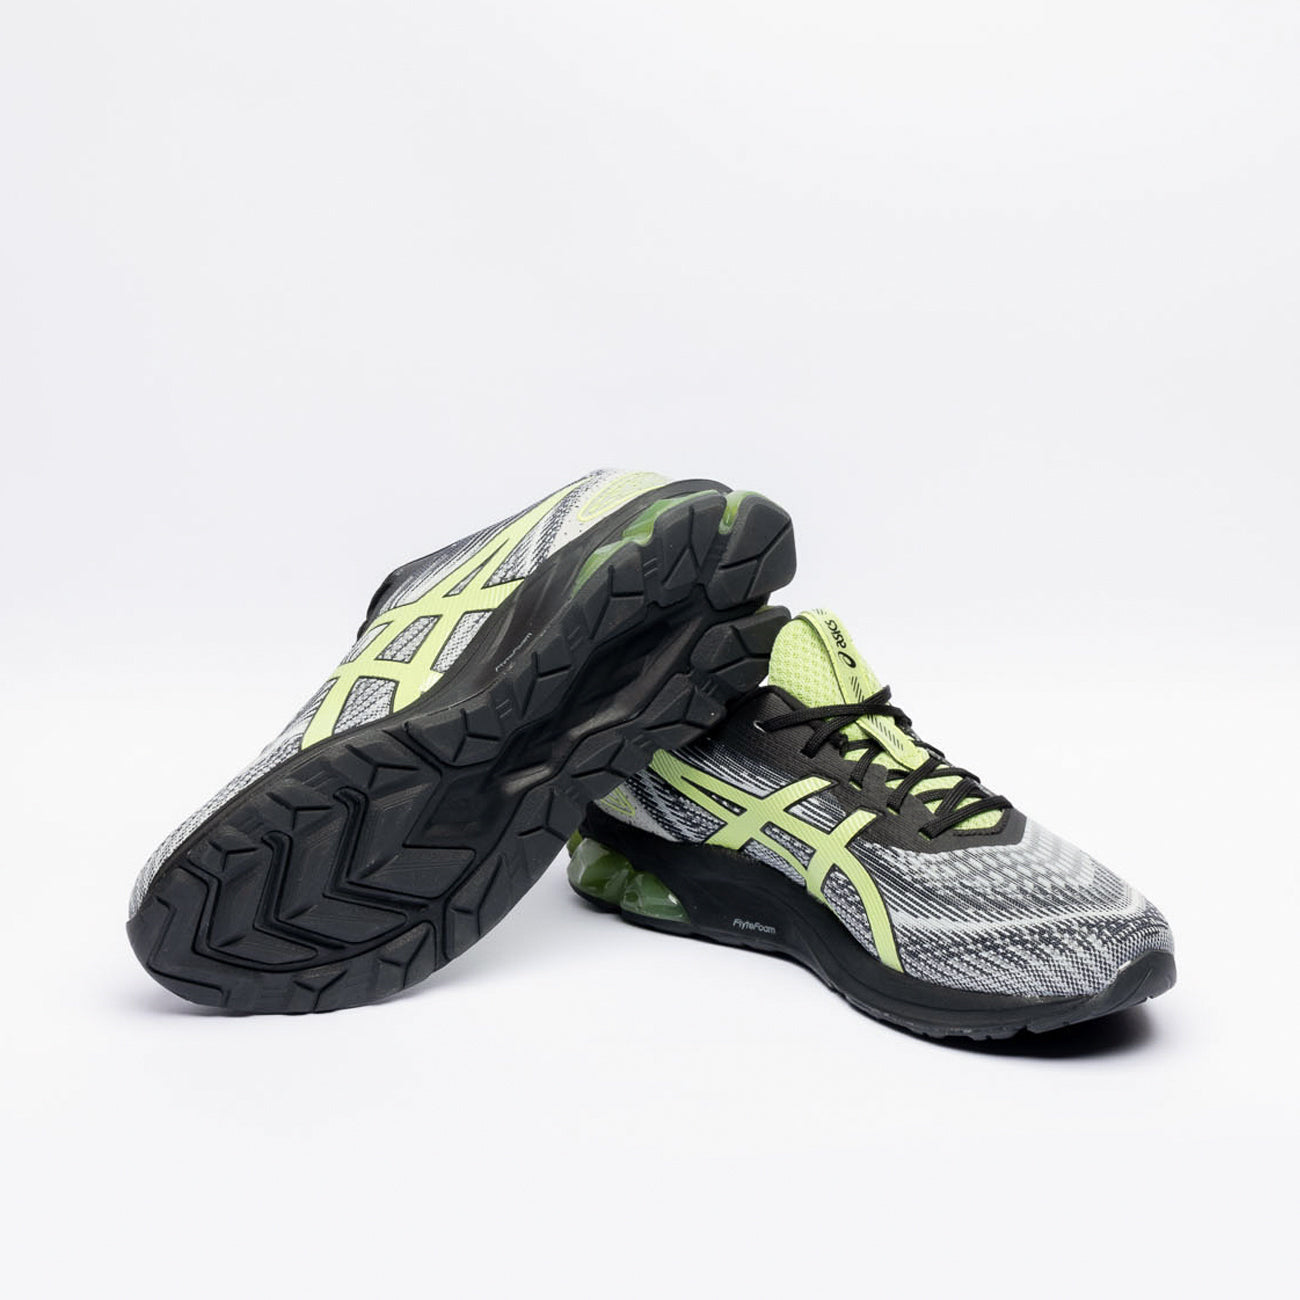 Running sneaker Asics Gel Quantum 180 VII in black fabric and green gel